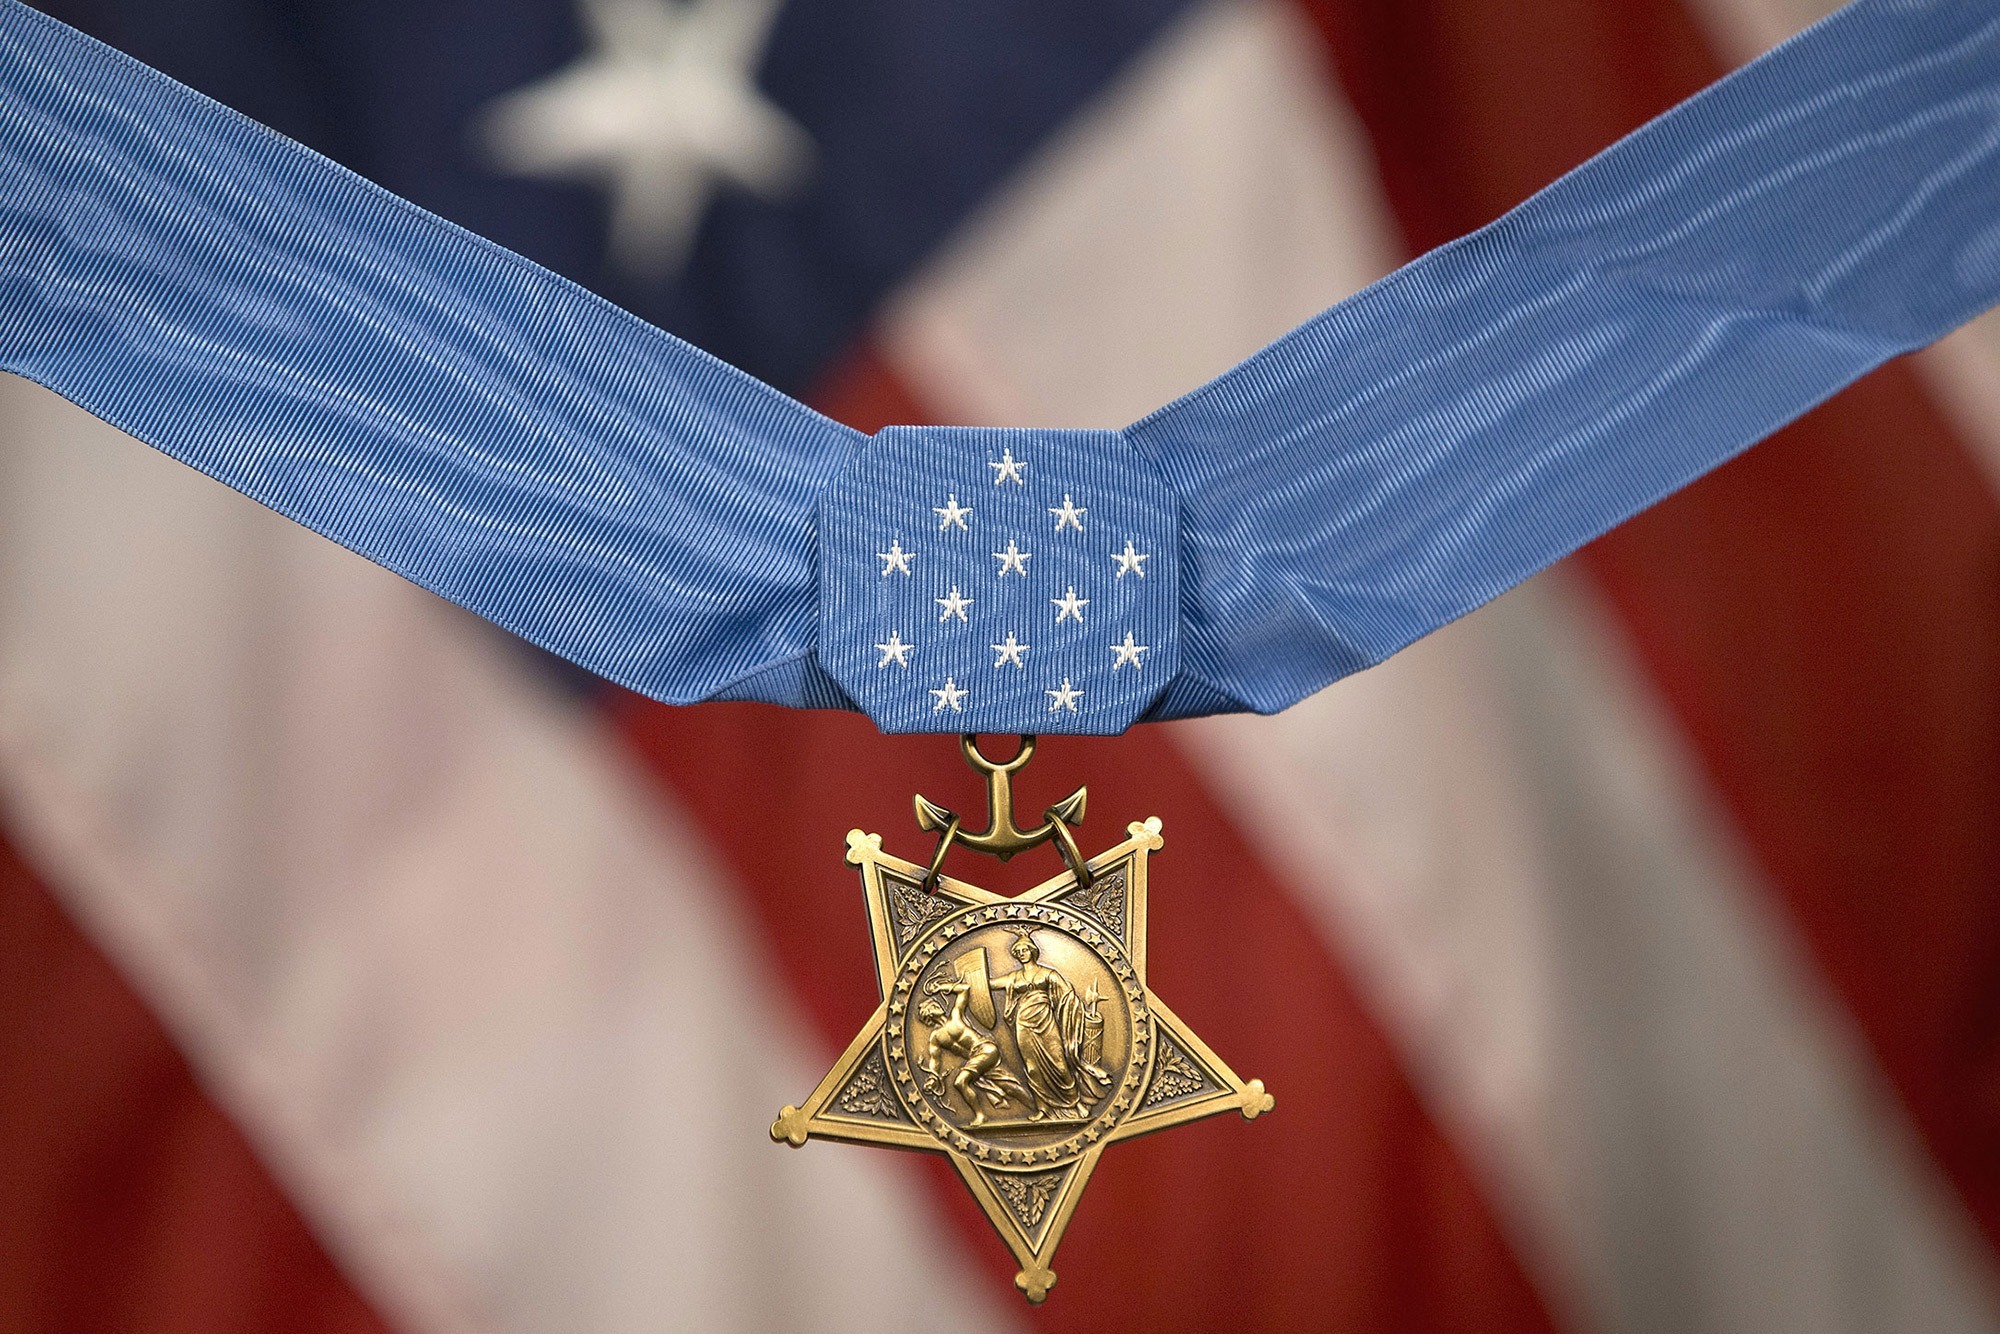 Congressional Medal of Honor awarded to Command Master Chief Britt Slabinski